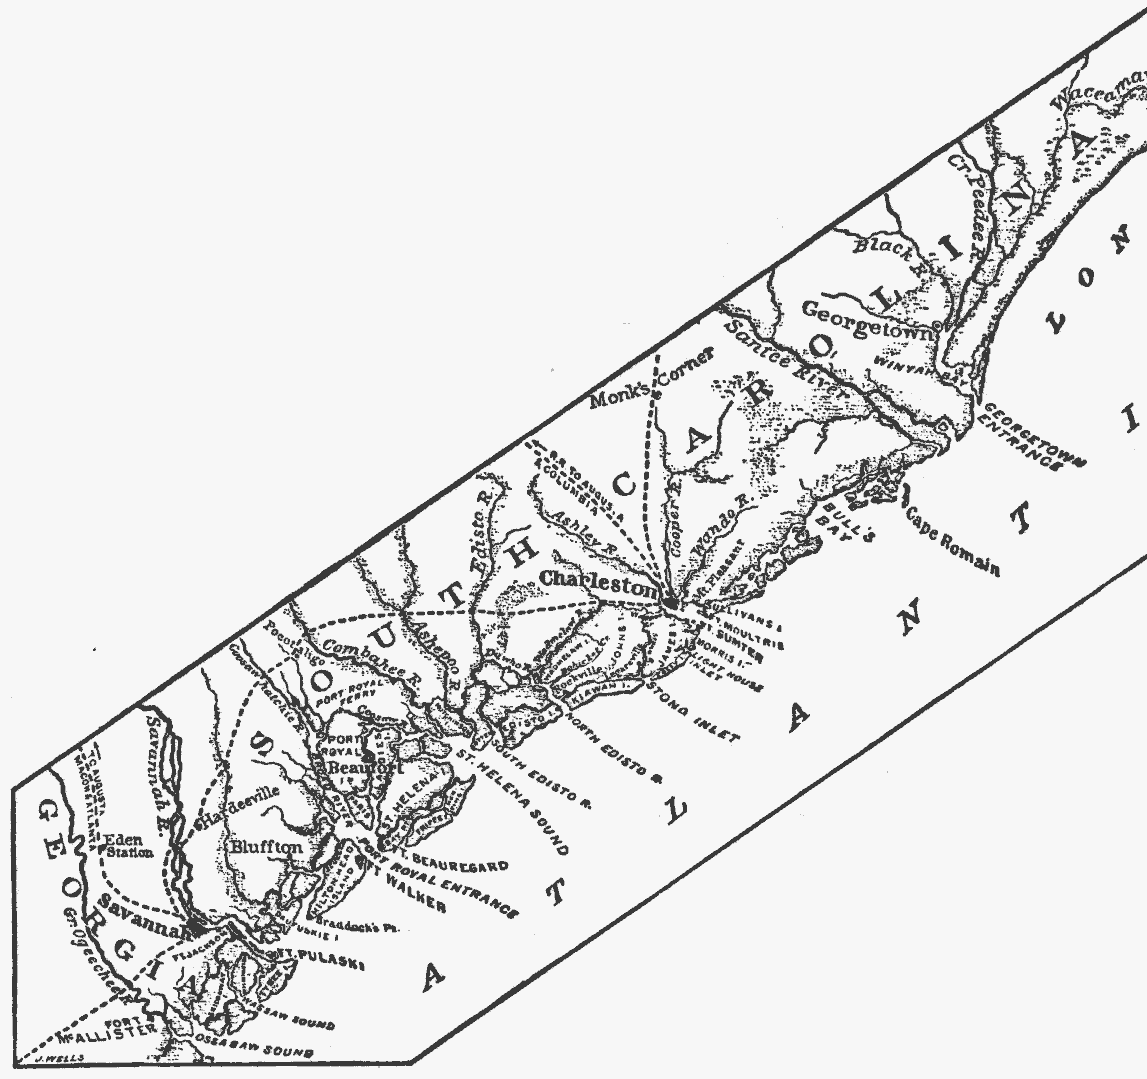 Map showing the coast of South Carolina